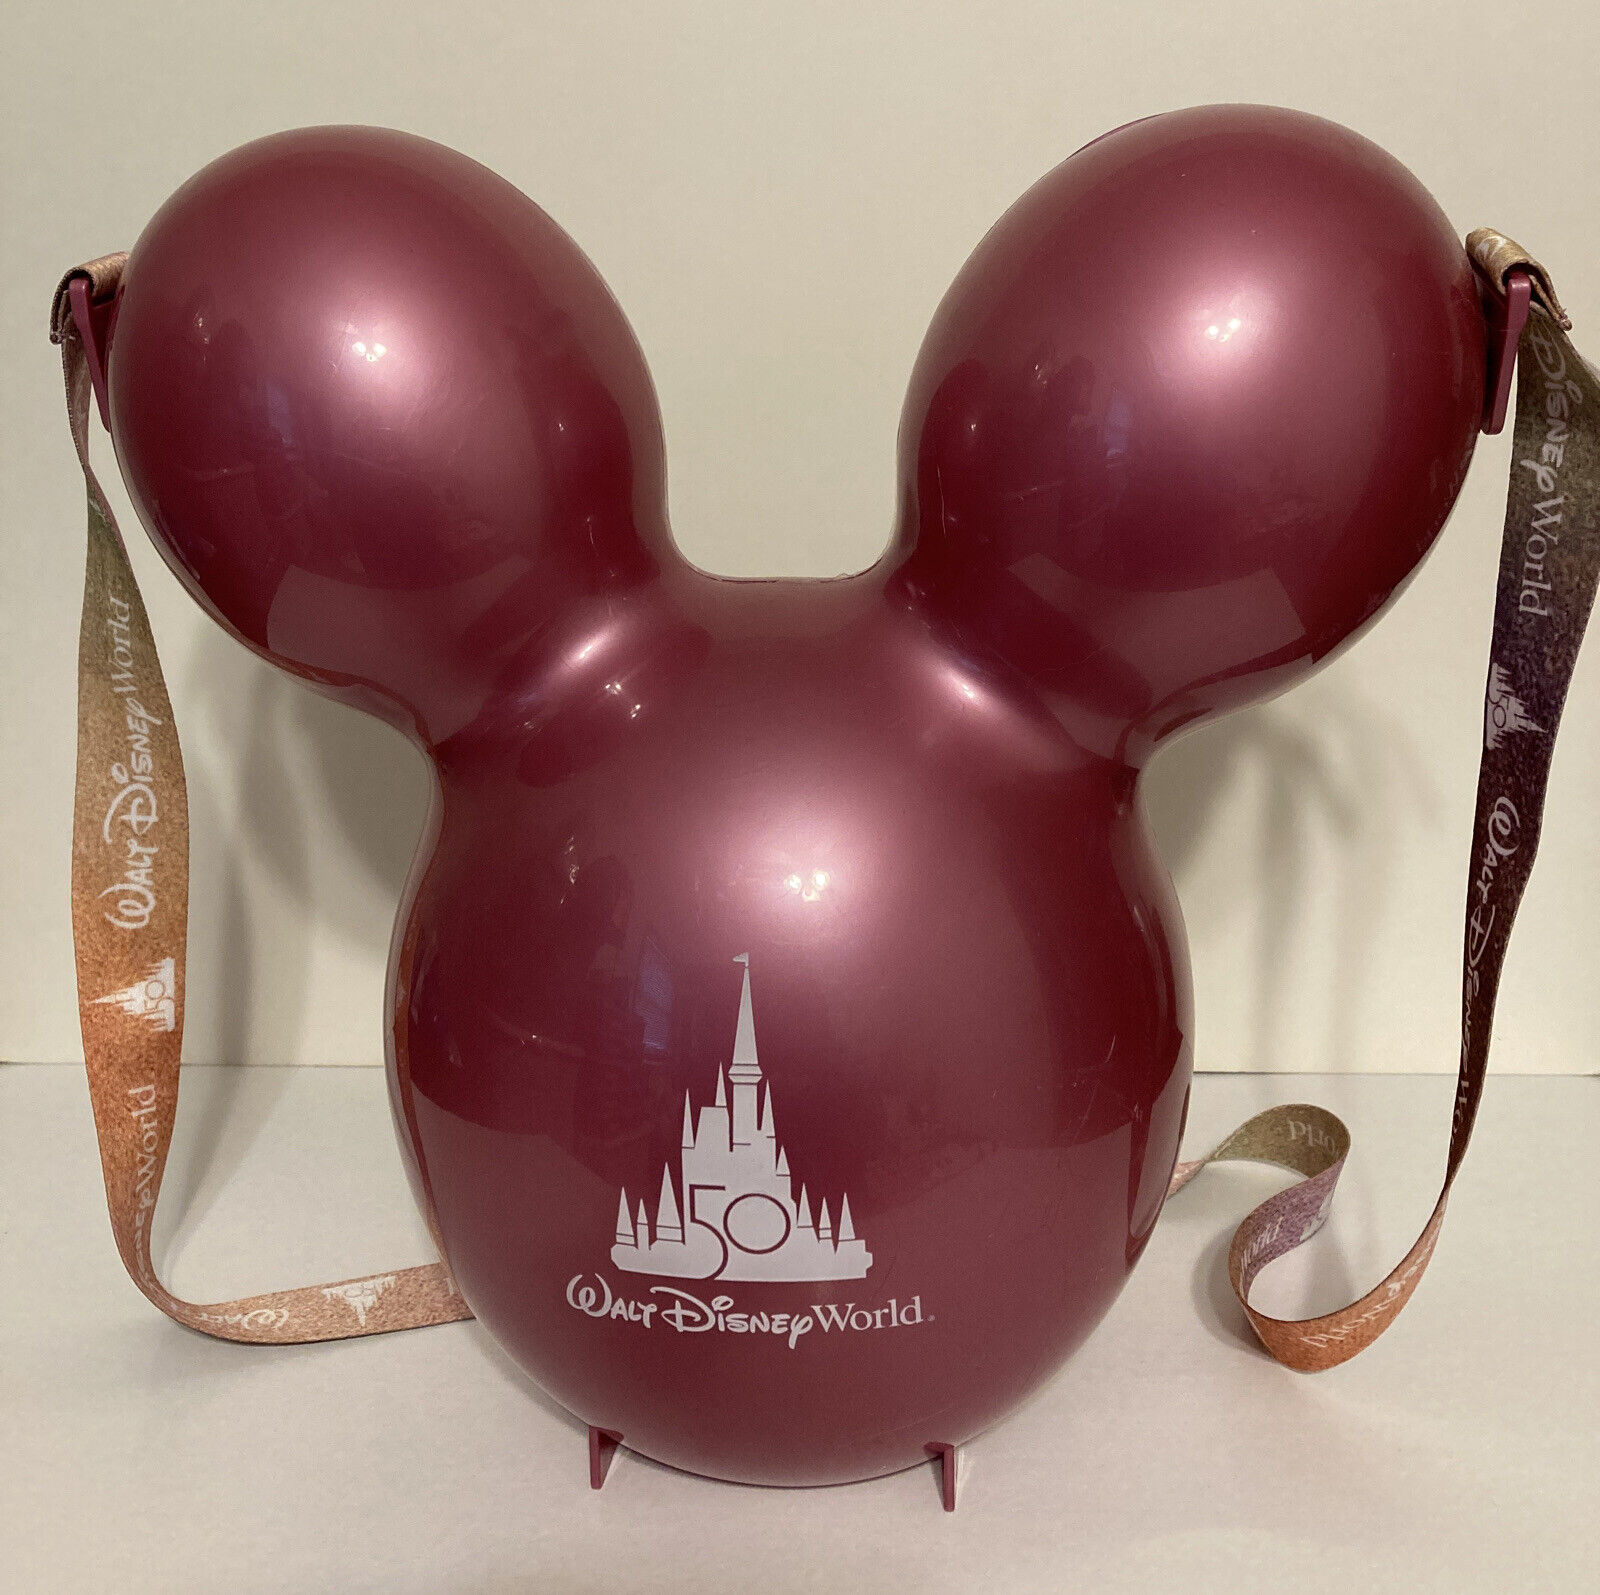 Walt Disney World 50th Anniversary Pink Balloon Popcorn Bucket